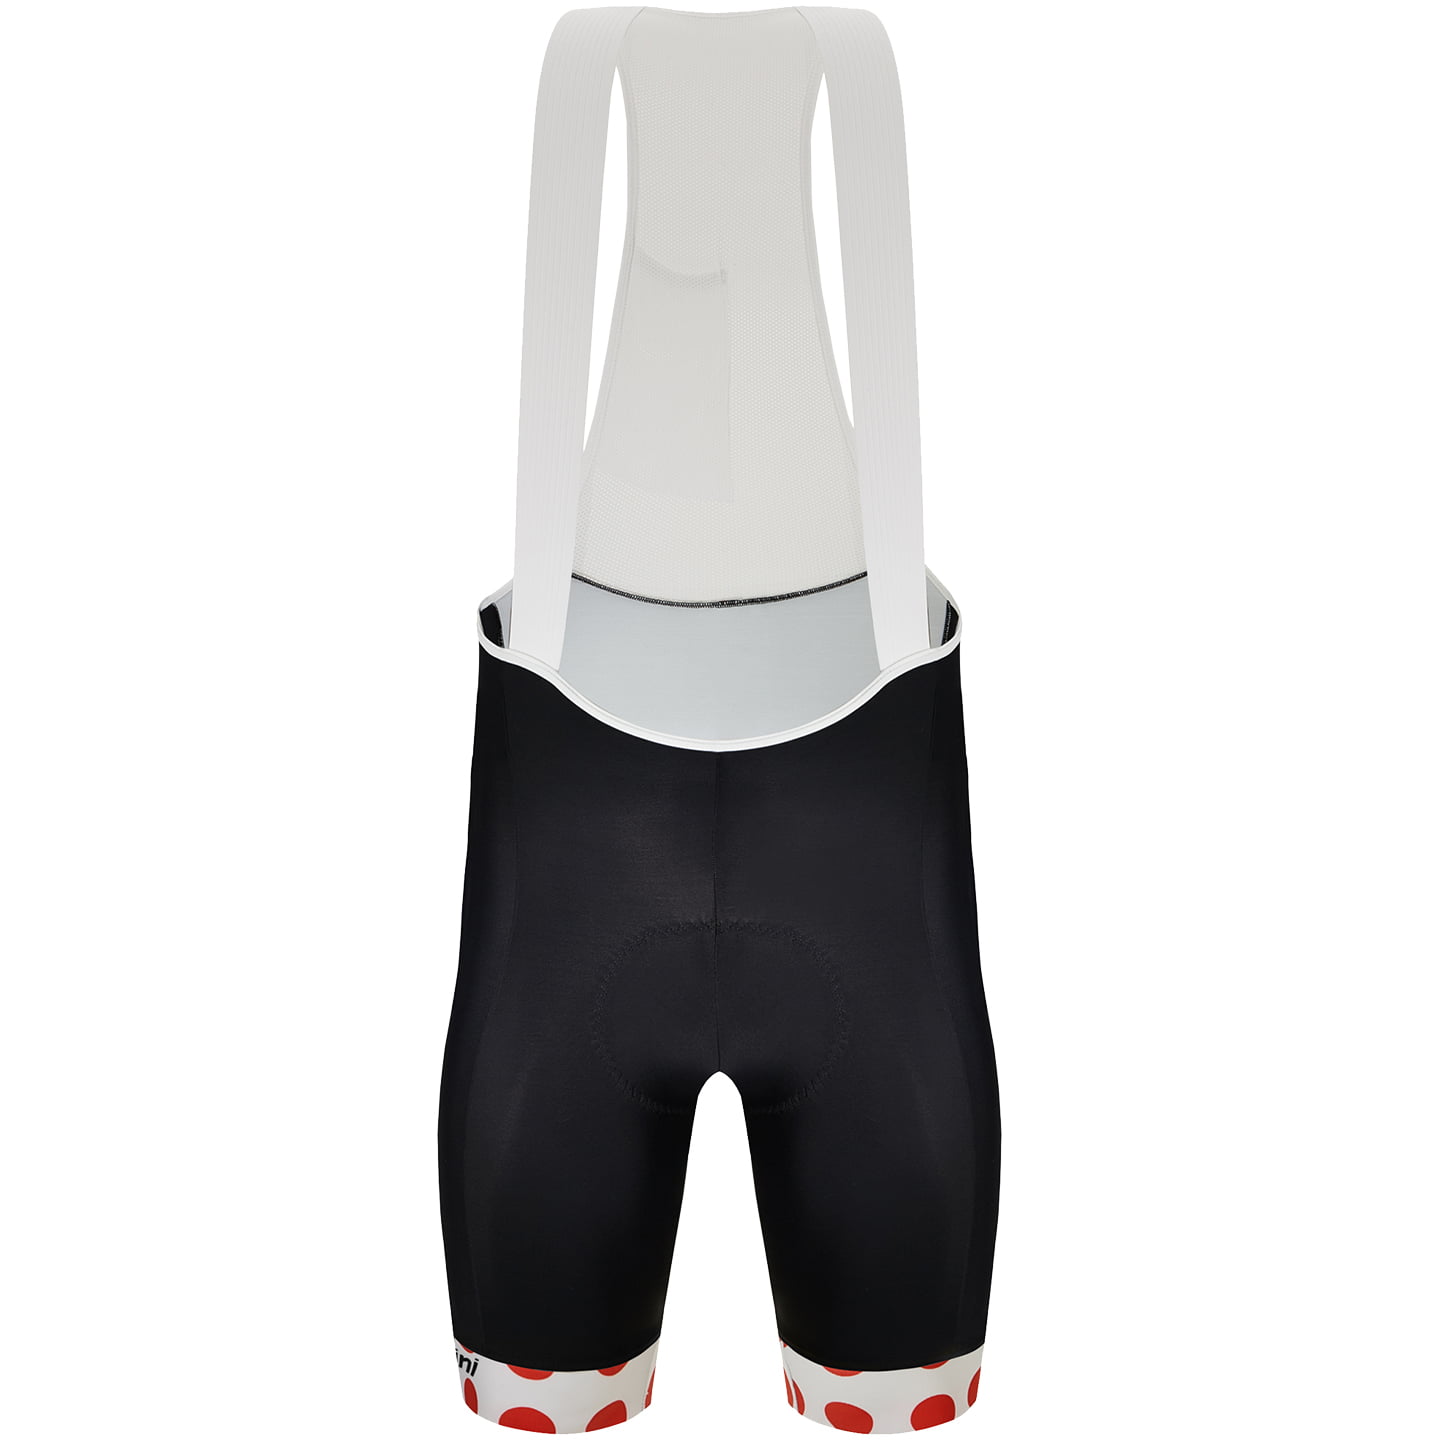 TOUR DE FRANCE Leader 2023 Bib Shorts, for men, size L, Cycle shorts, Cycling clothing